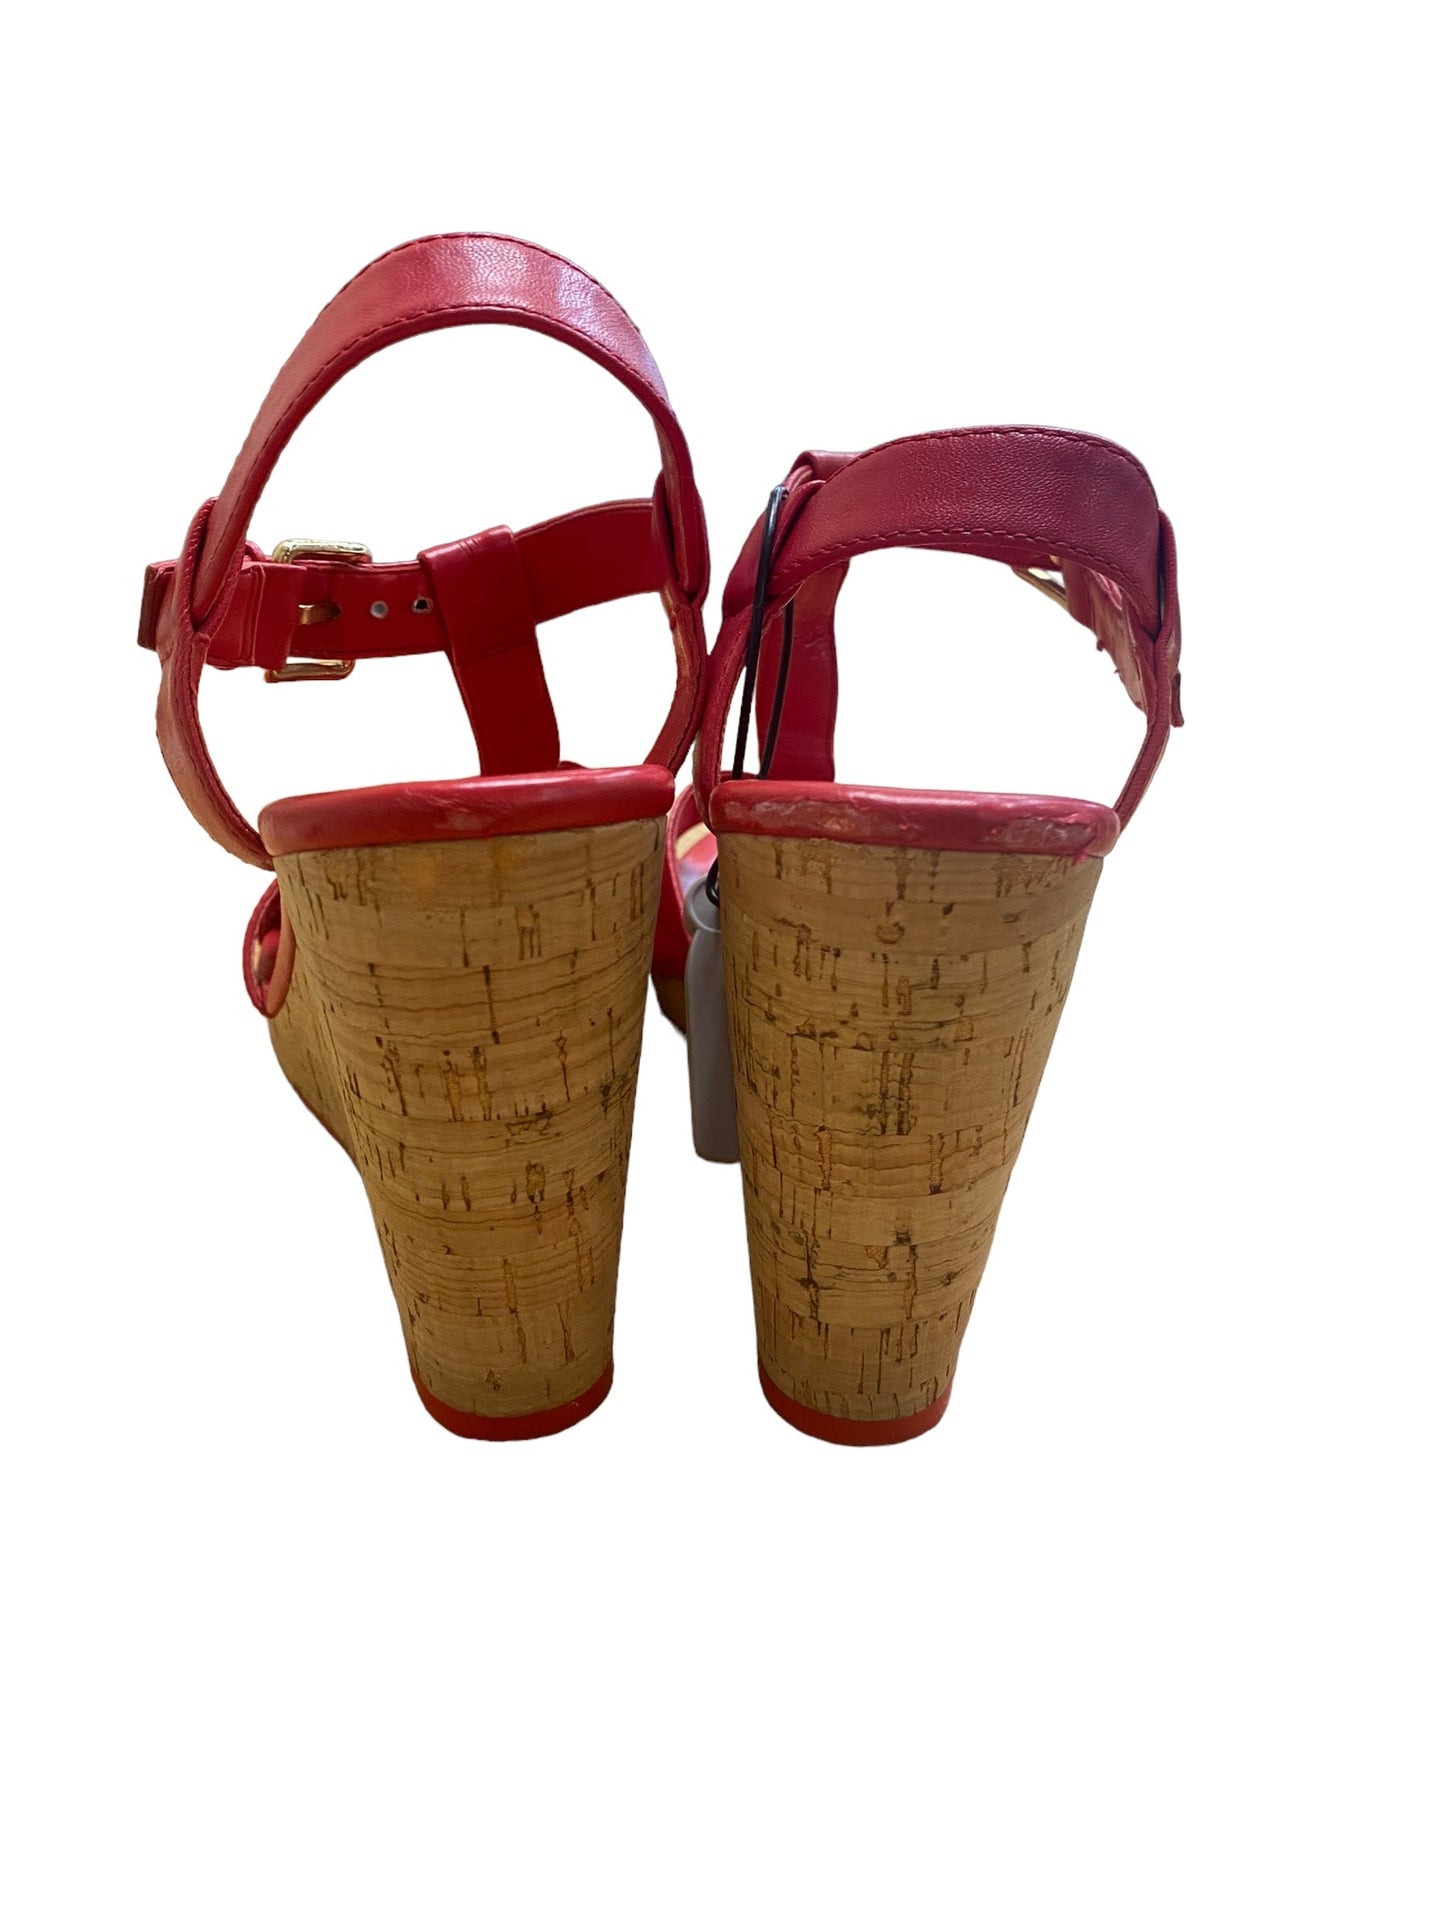 Sandals Heels Wedge By Cole-haan  Size: 8.5